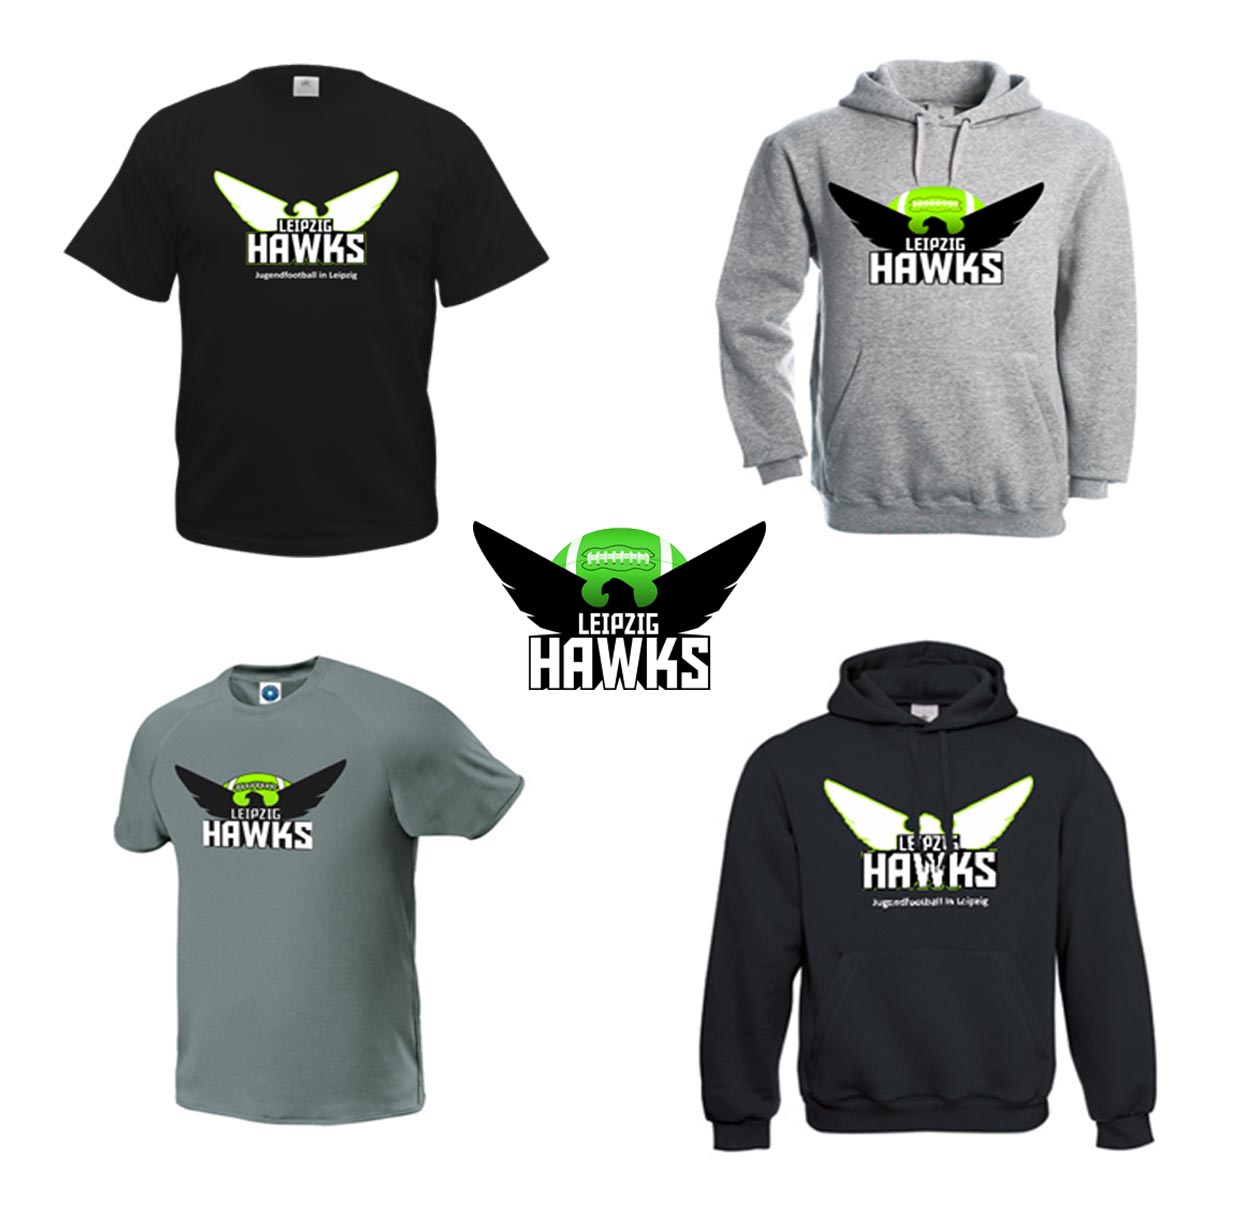 Hawks Shop ist online!